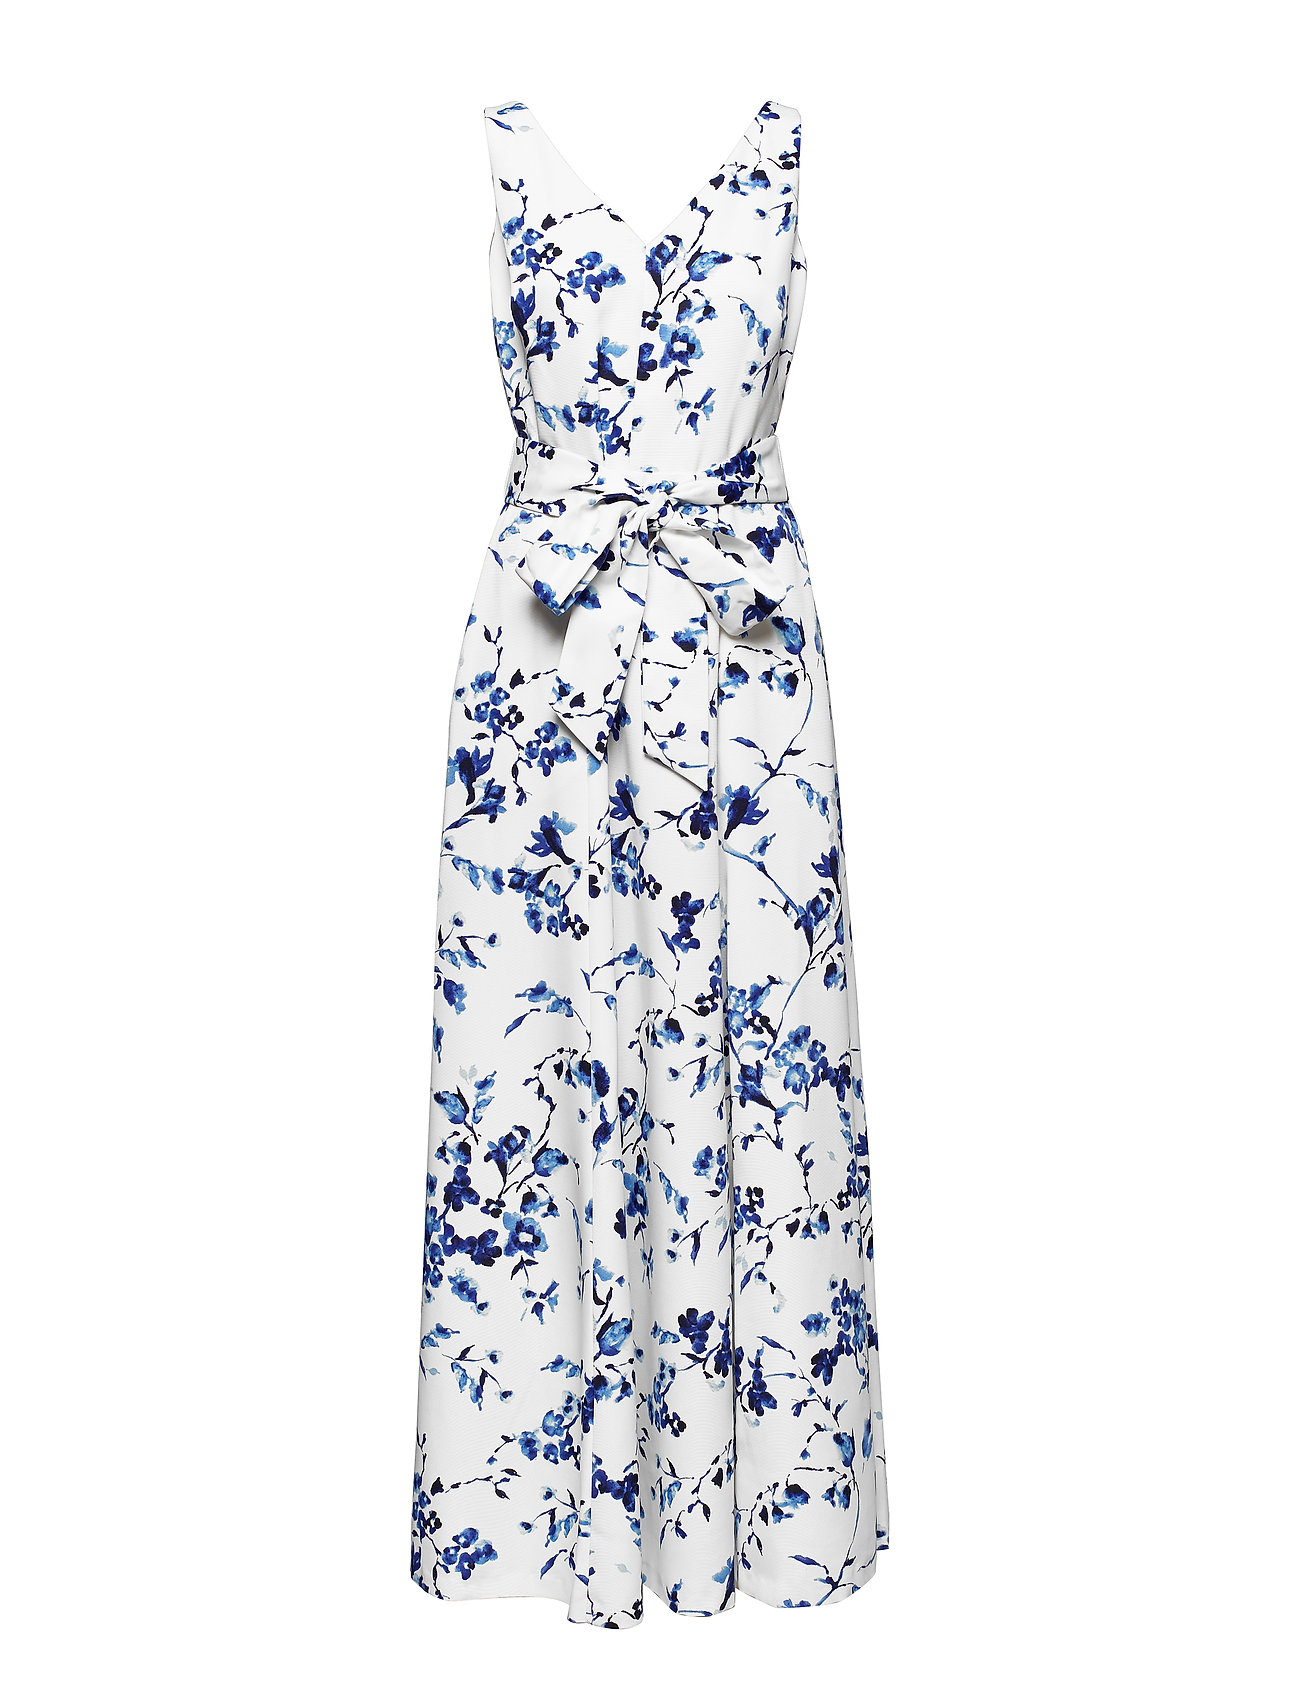 ralph lauren blue and white dress